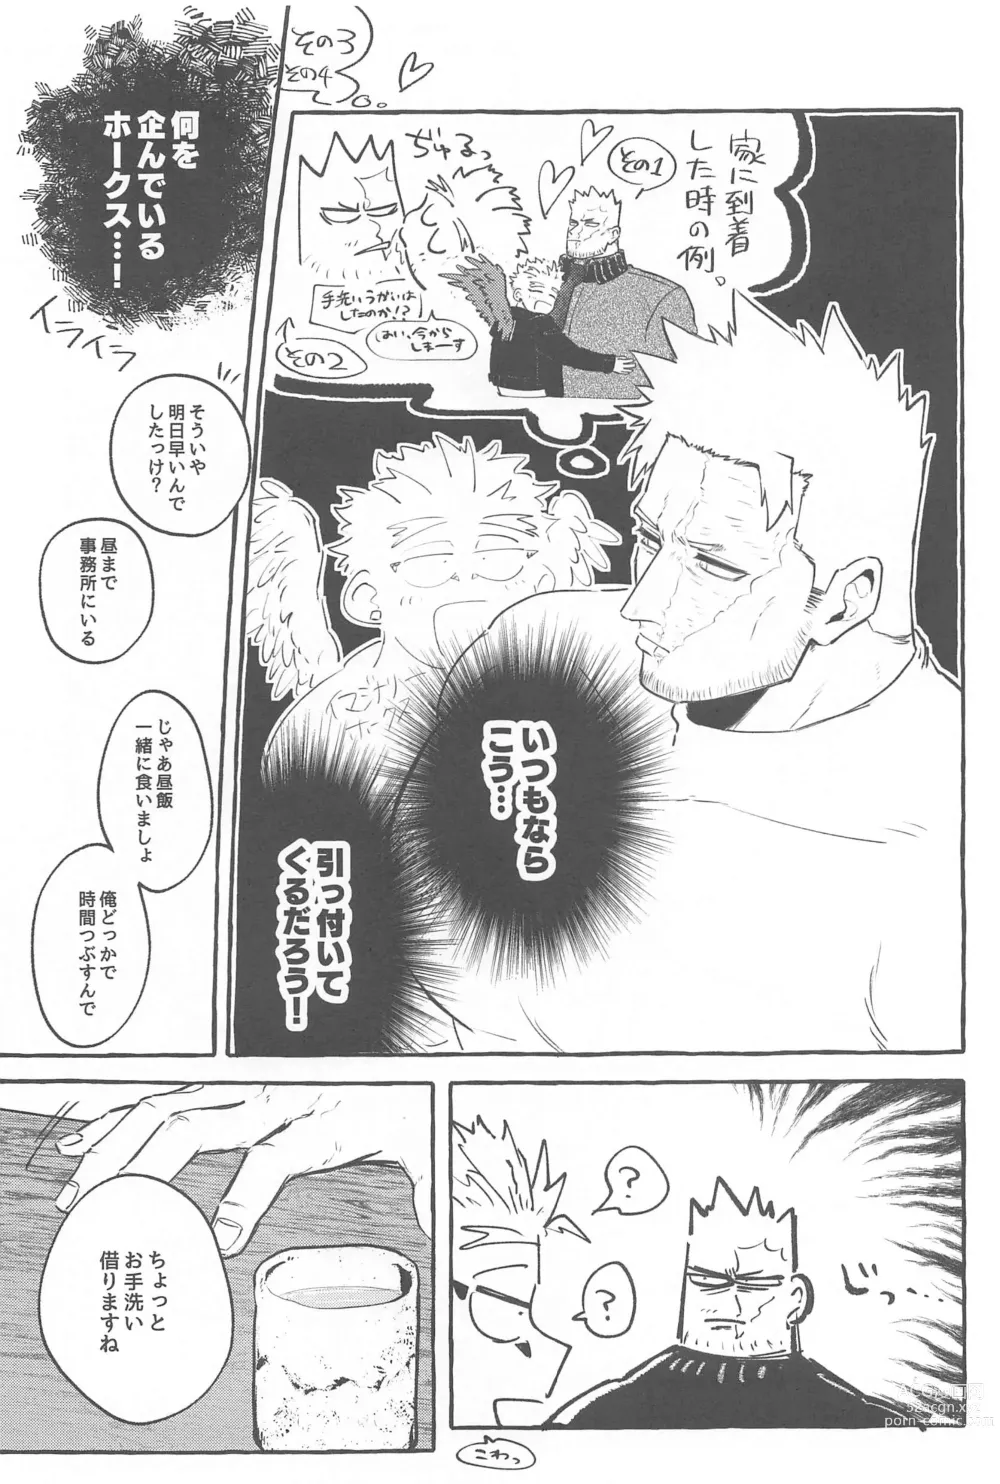 Page 8 of doujinshi Warrgle Sengen